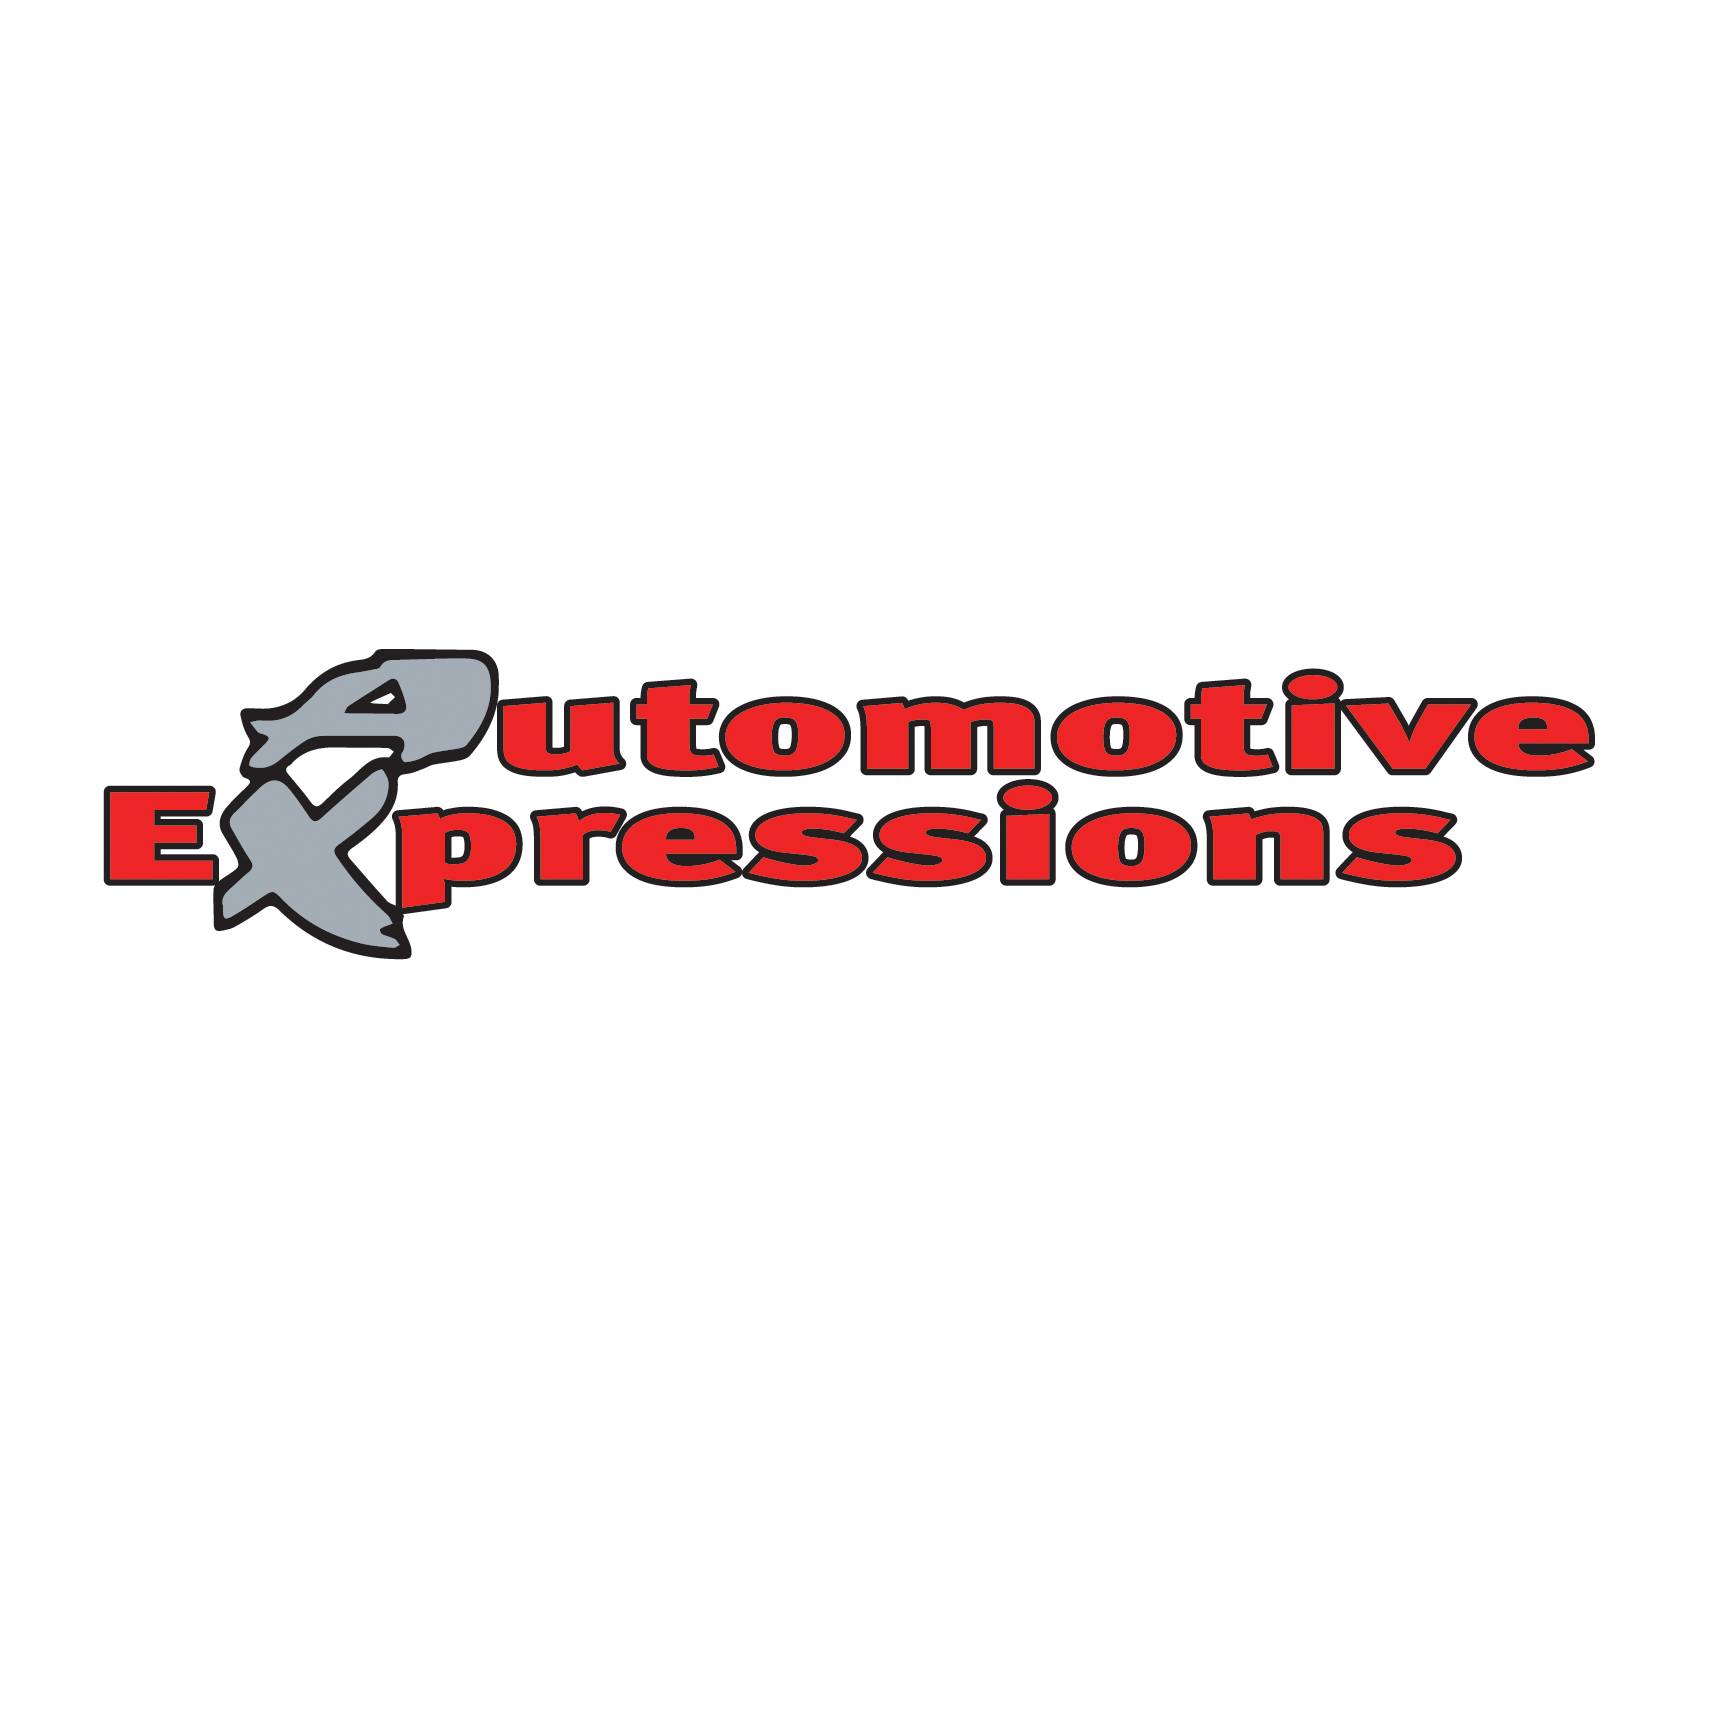 Automotive Expressions